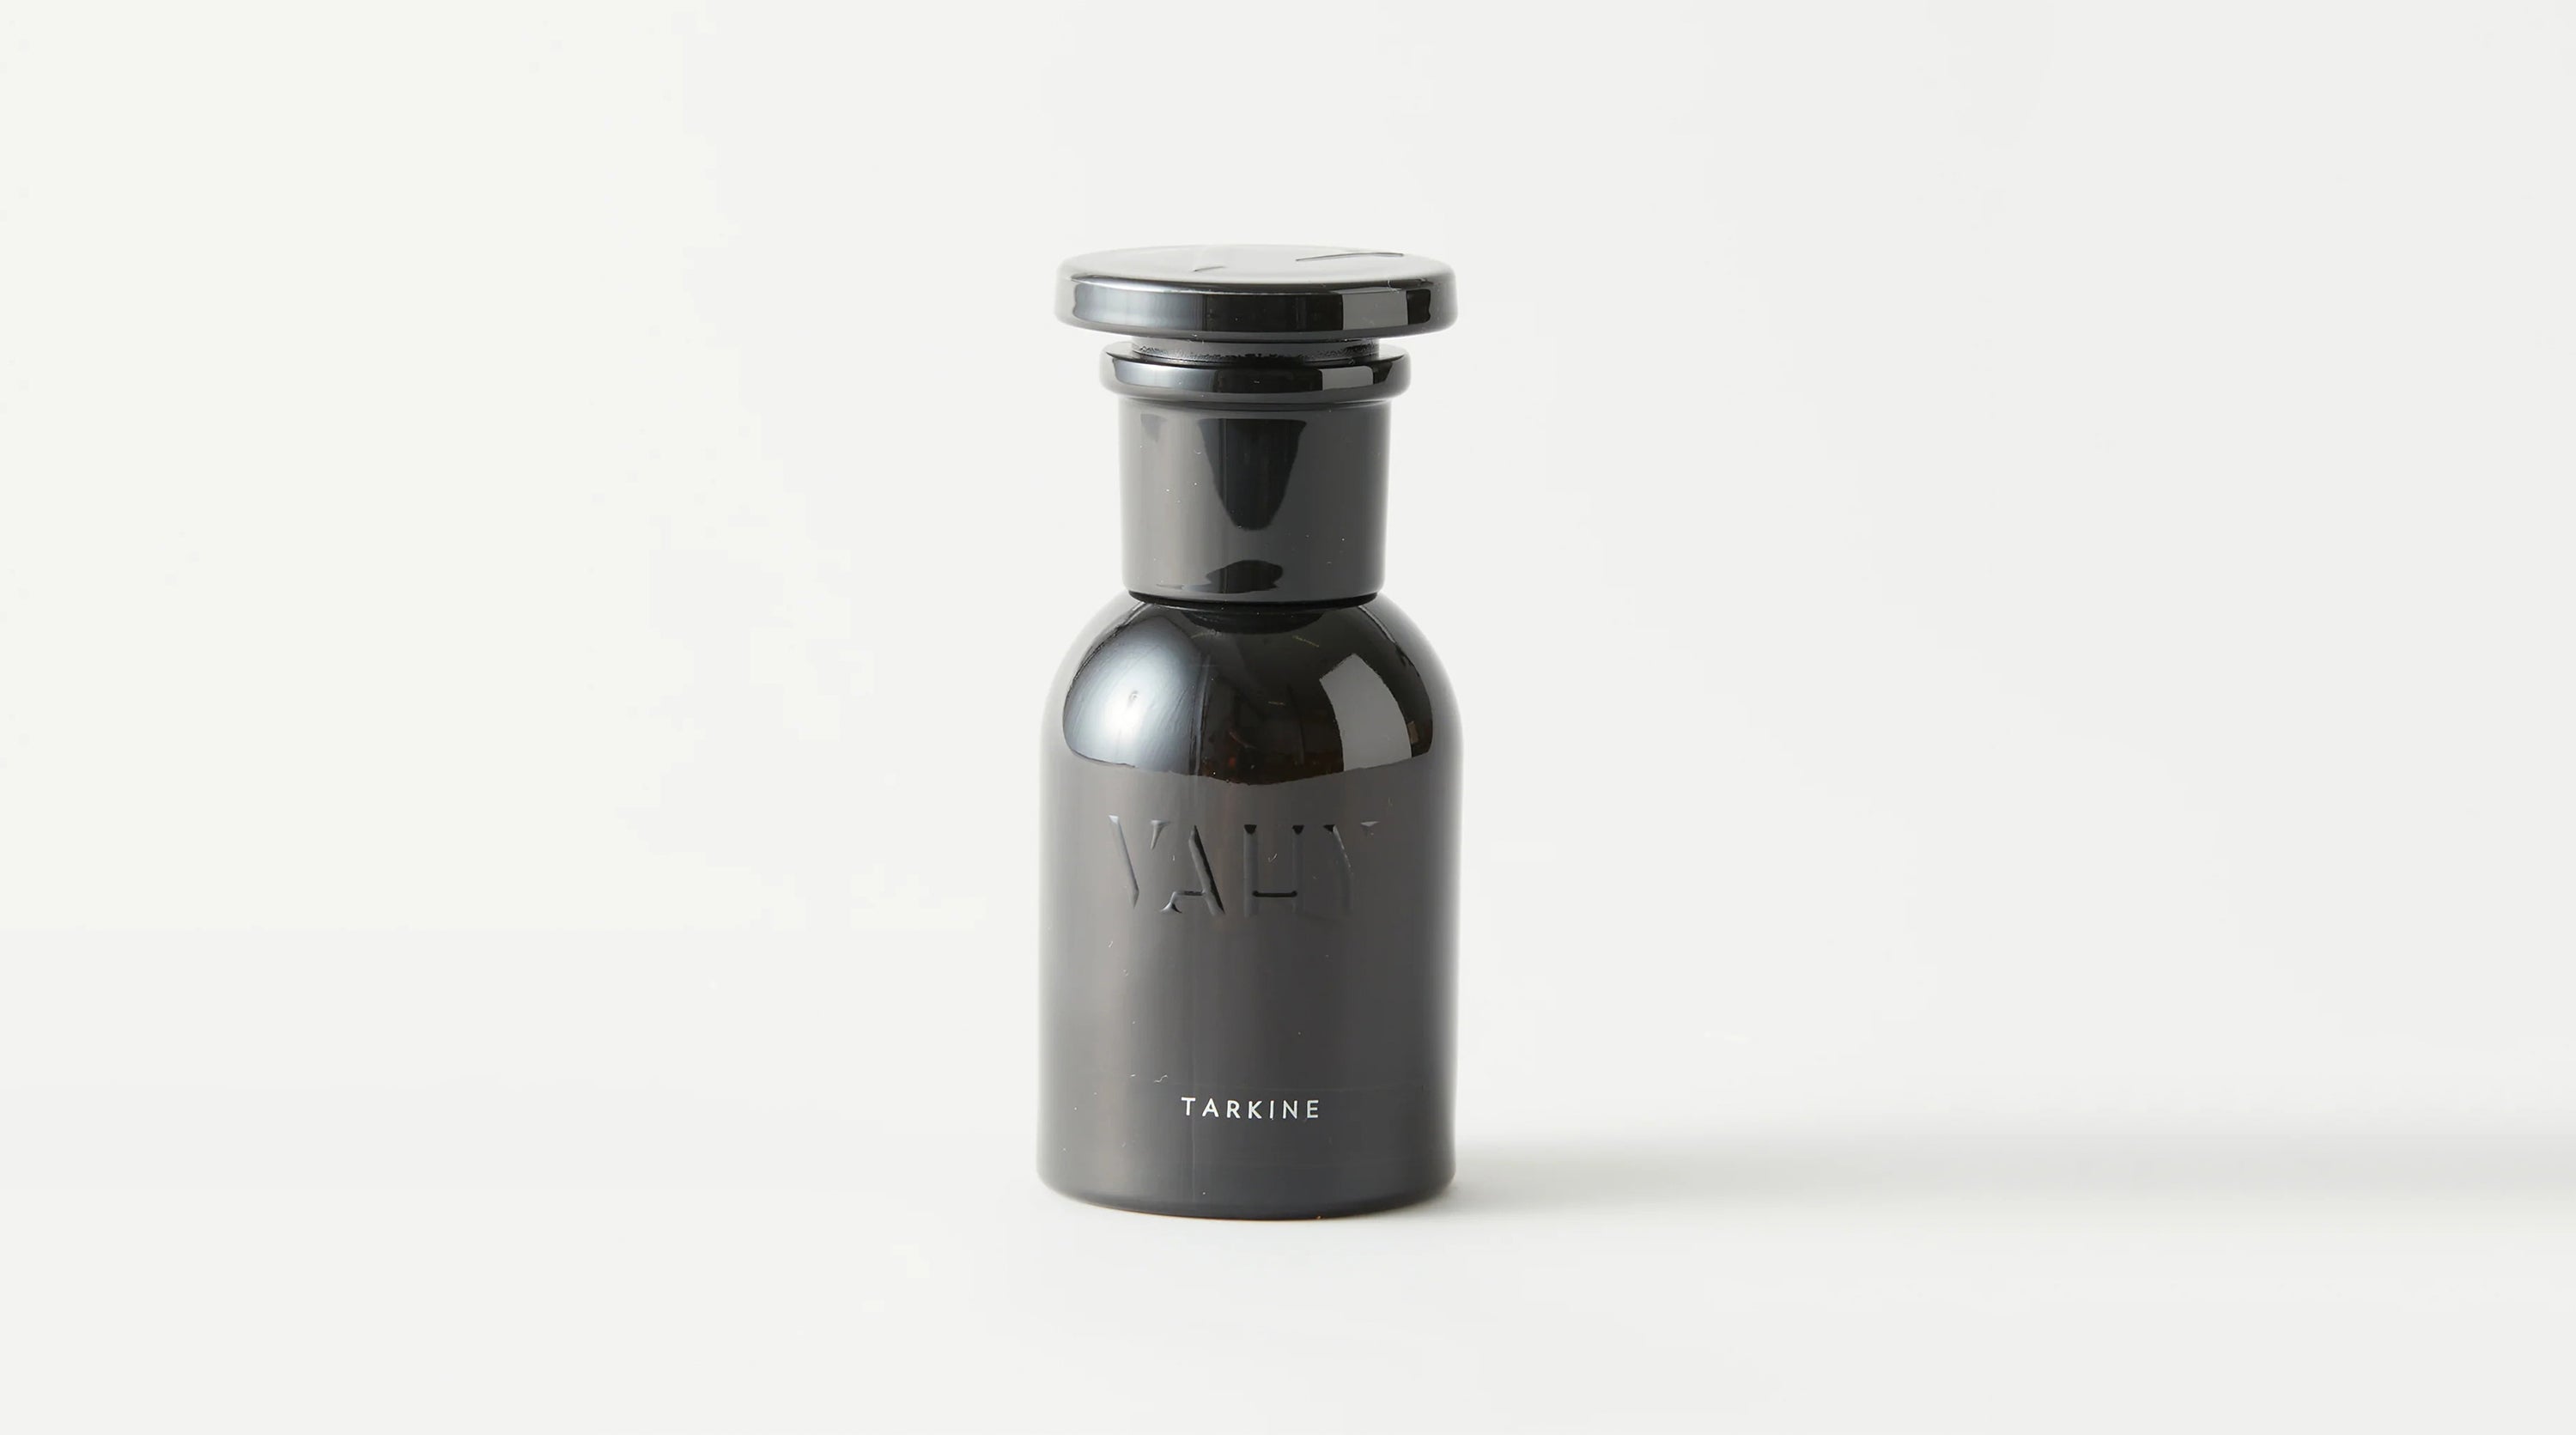 Tarkine by Vahy 100% Natural Perfume at Sensoriam